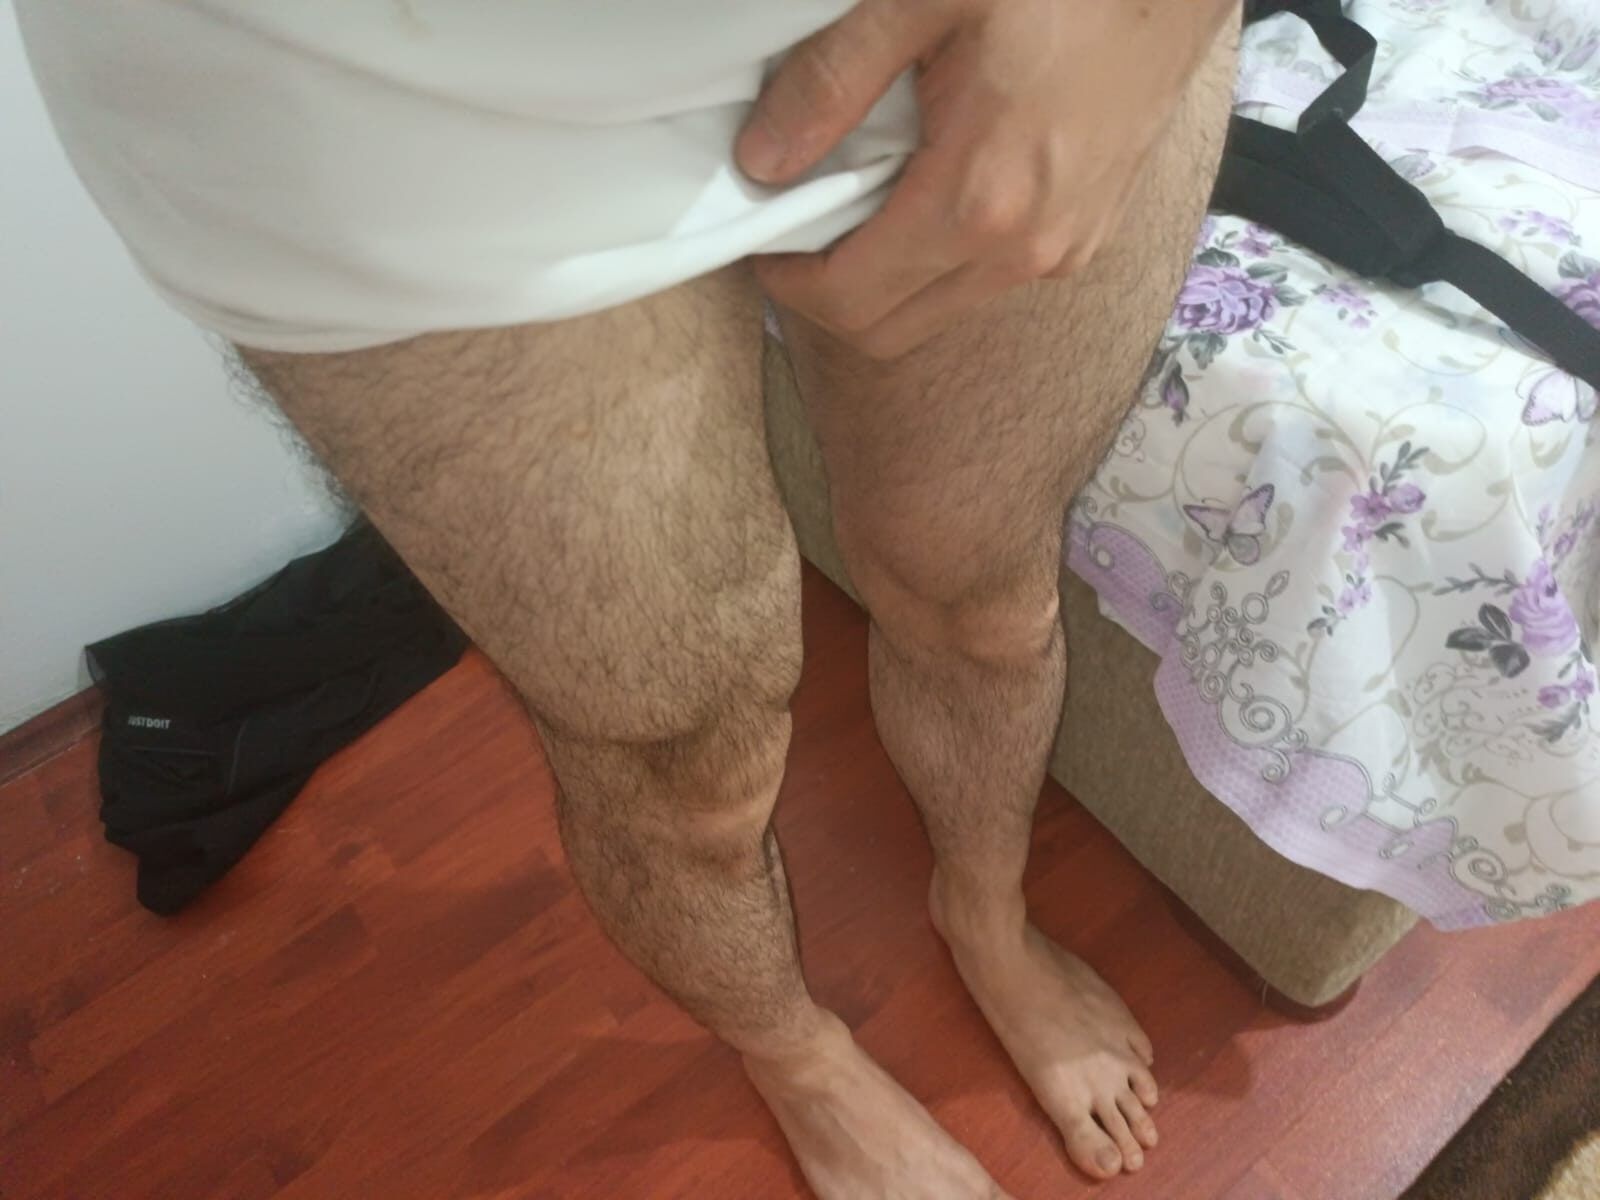  hairy leg